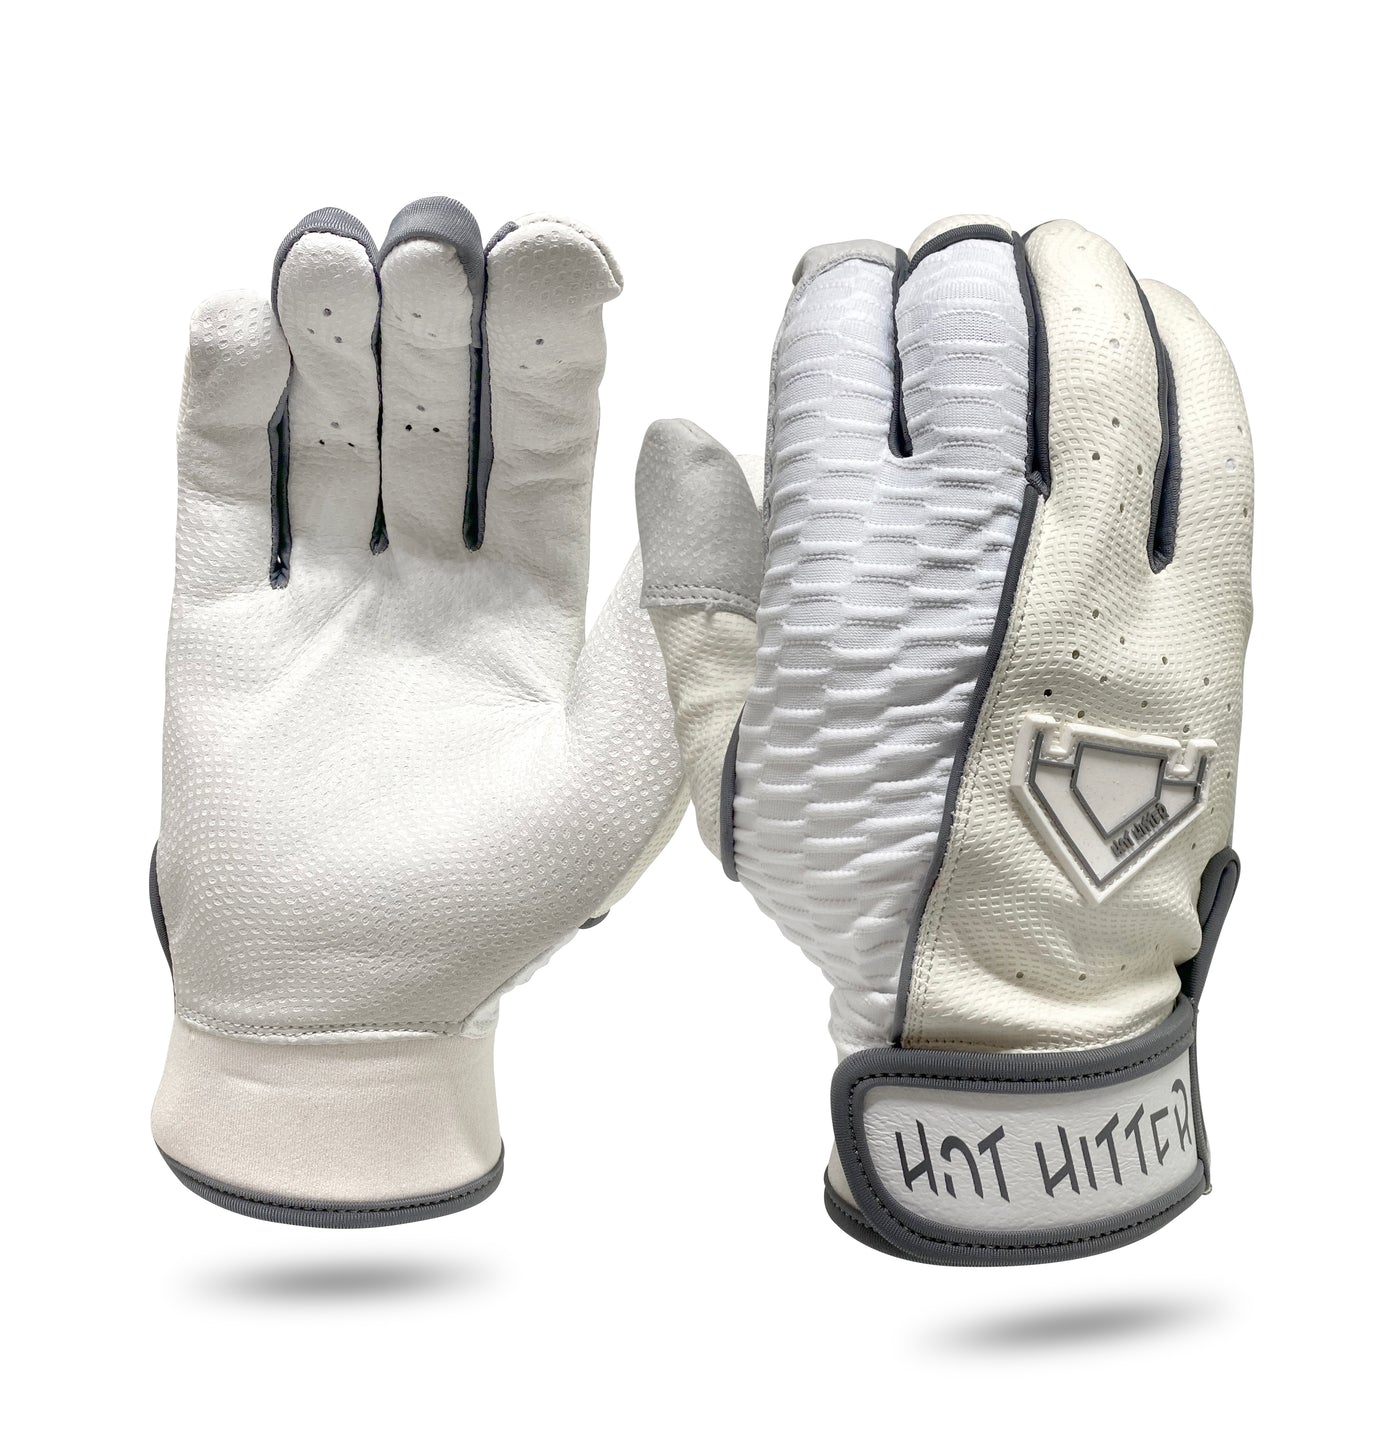 Extra Innings Batting Gloves White & Grey